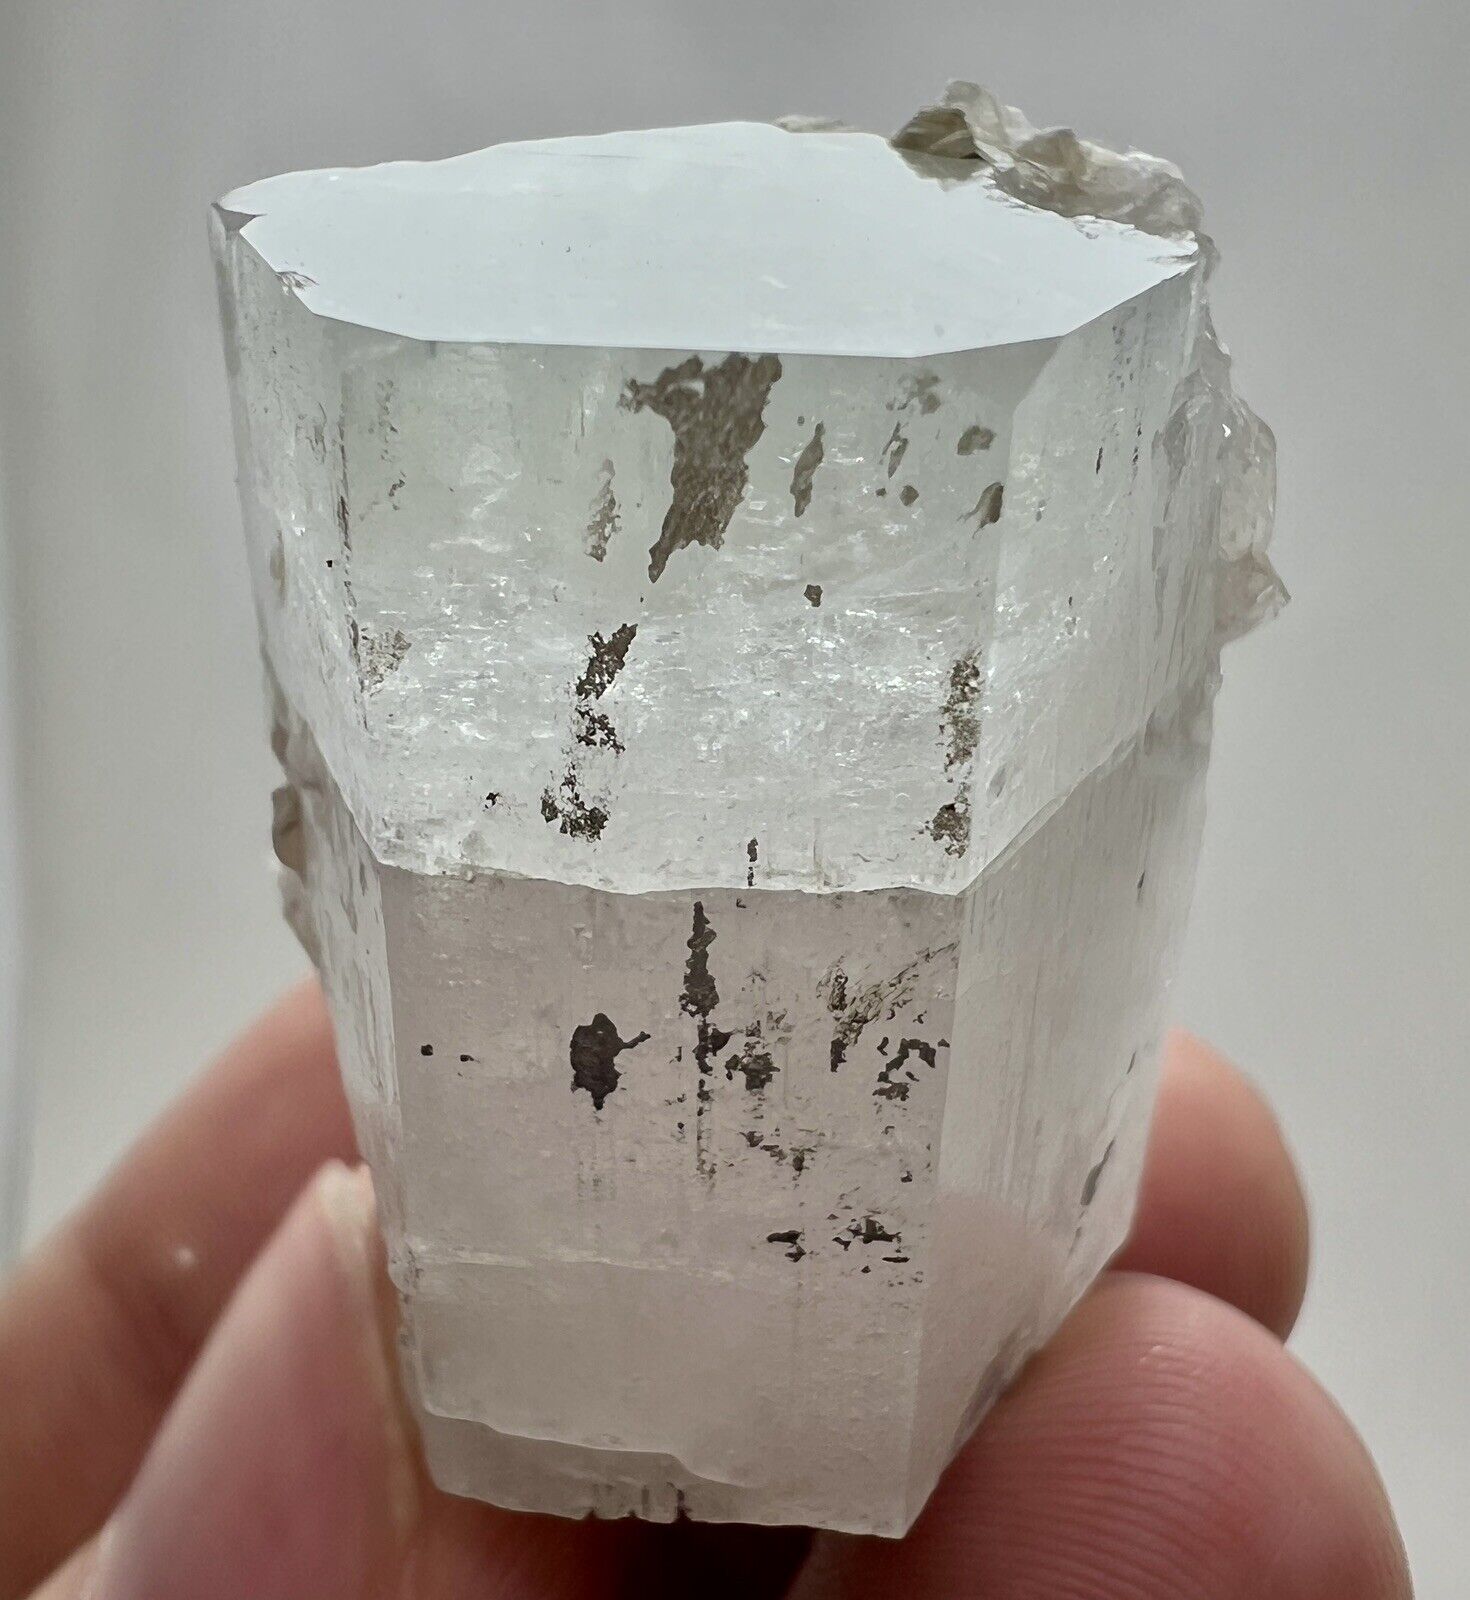 166 Ct. Ultra Rare Well Terminated Natural Aqua-Morganite Crystal From Pakistan